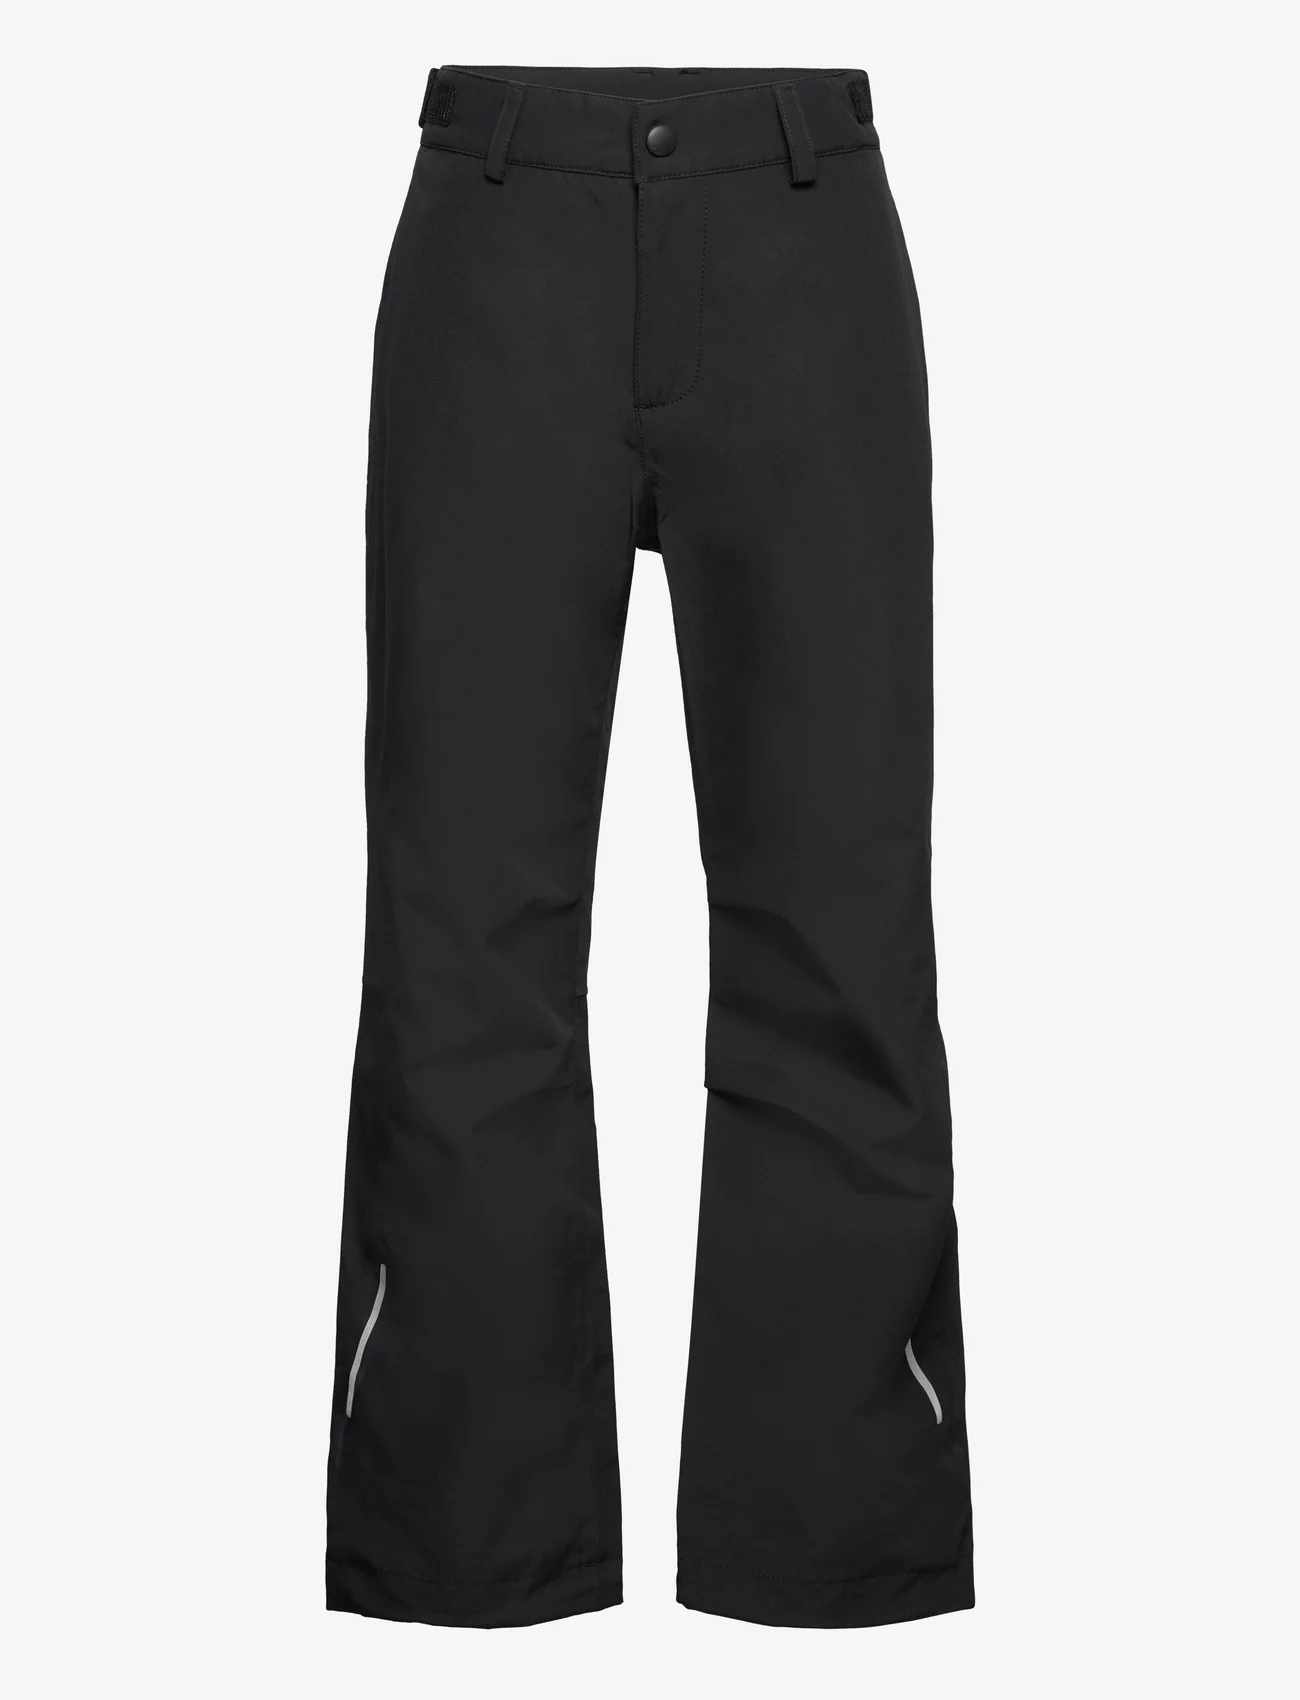 Reima - Reimatec pants, Konsti - outdoorhosen - black - 0